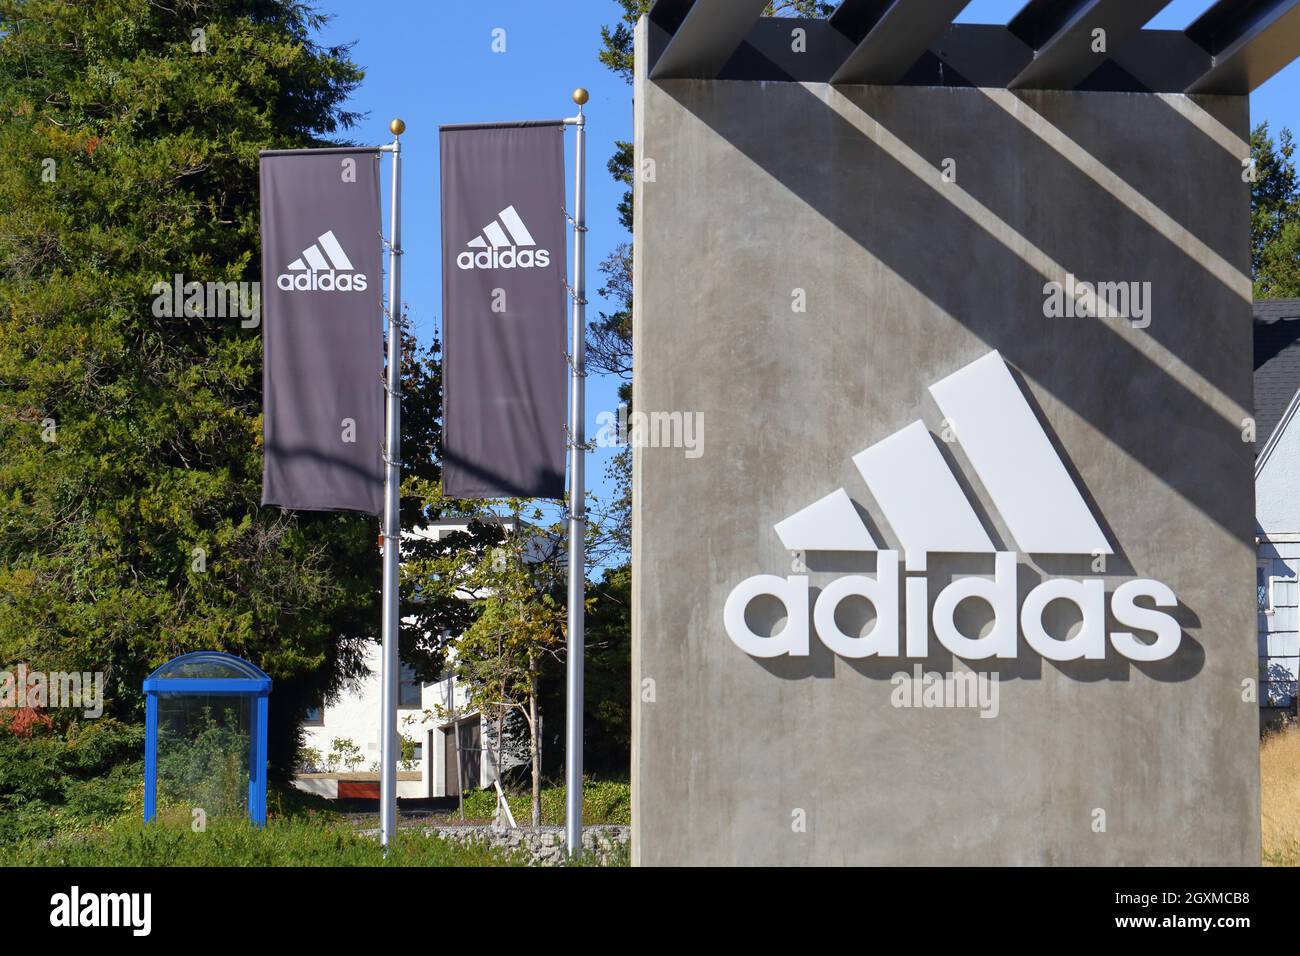 Ingresso all'Adidas Campus Expansion, 5060 N Greeley Ave, Portland, Oregon, con il logo Adidas sulle bandiere contro un cielo soleggiato. Foto Stock